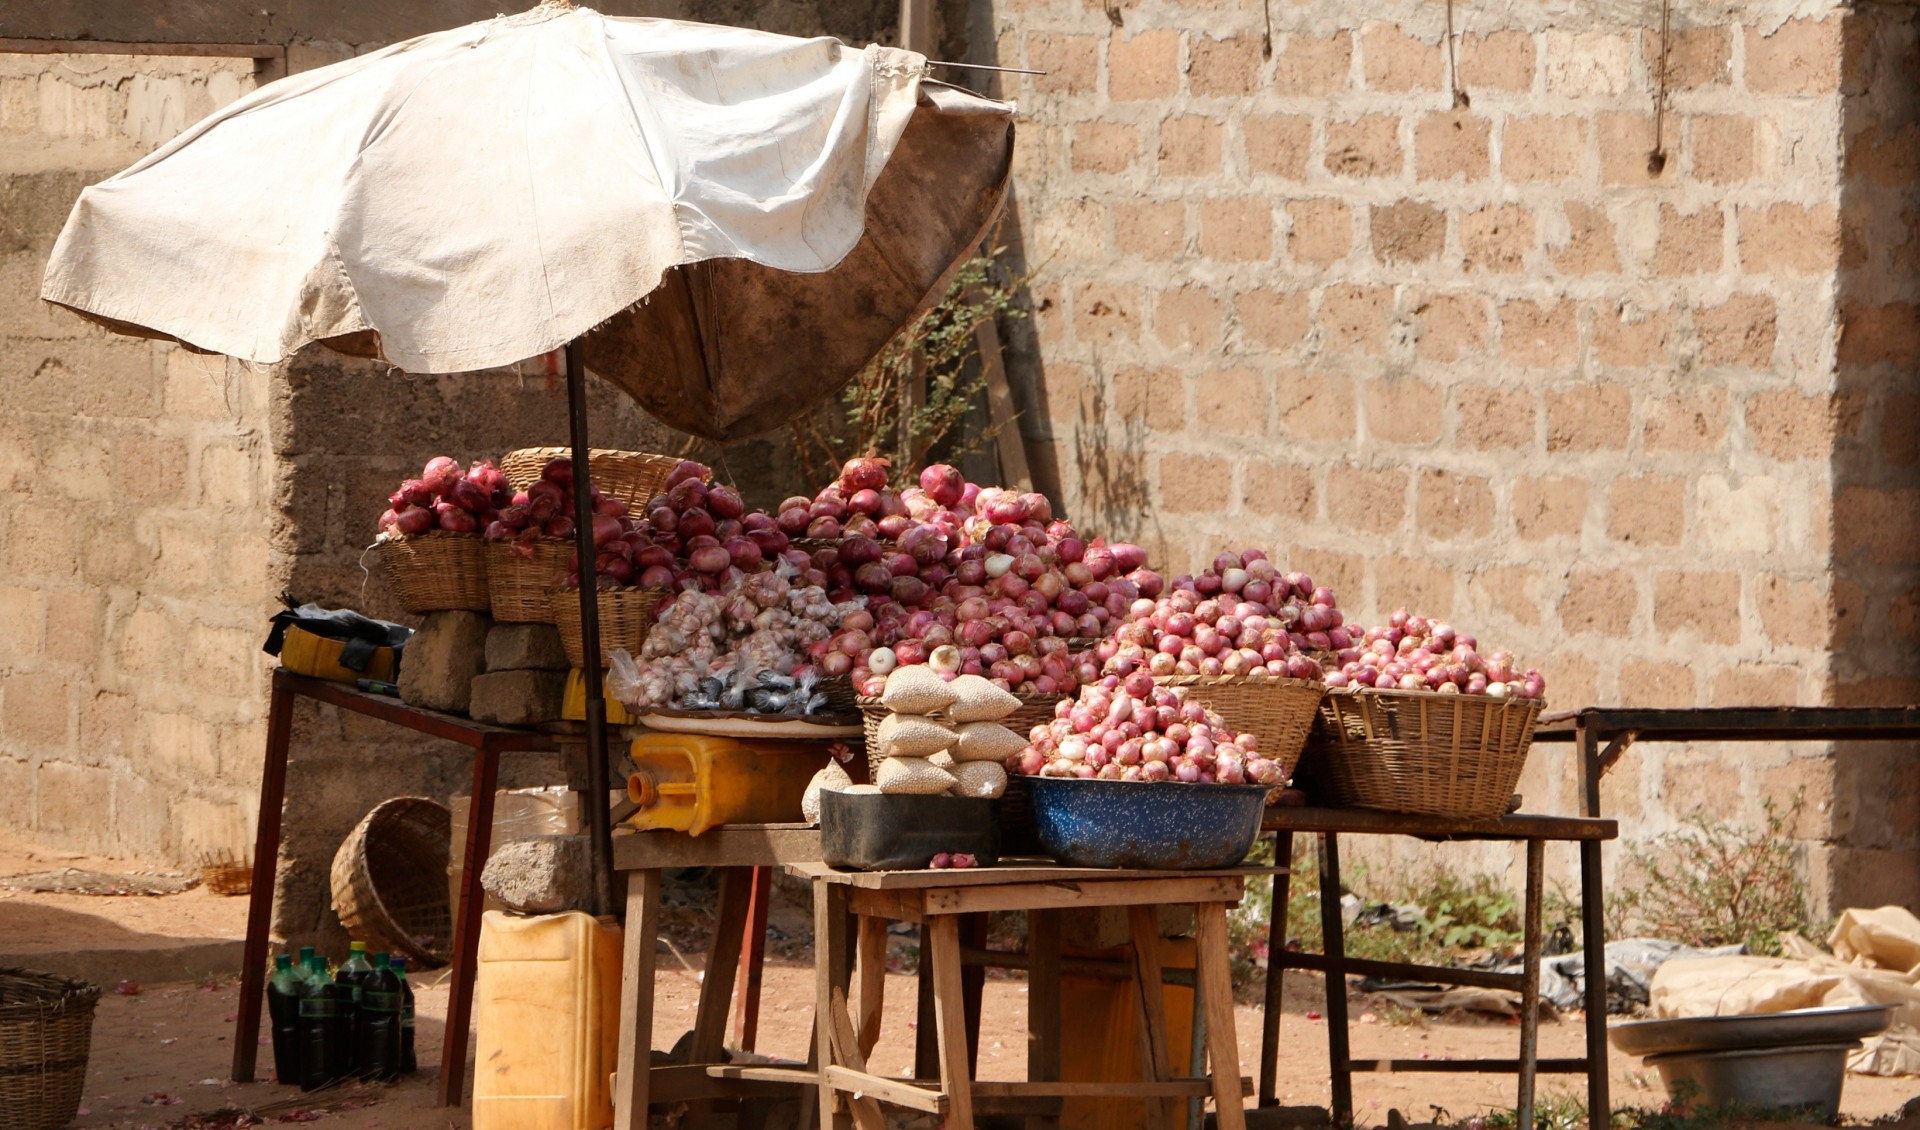 Benin market